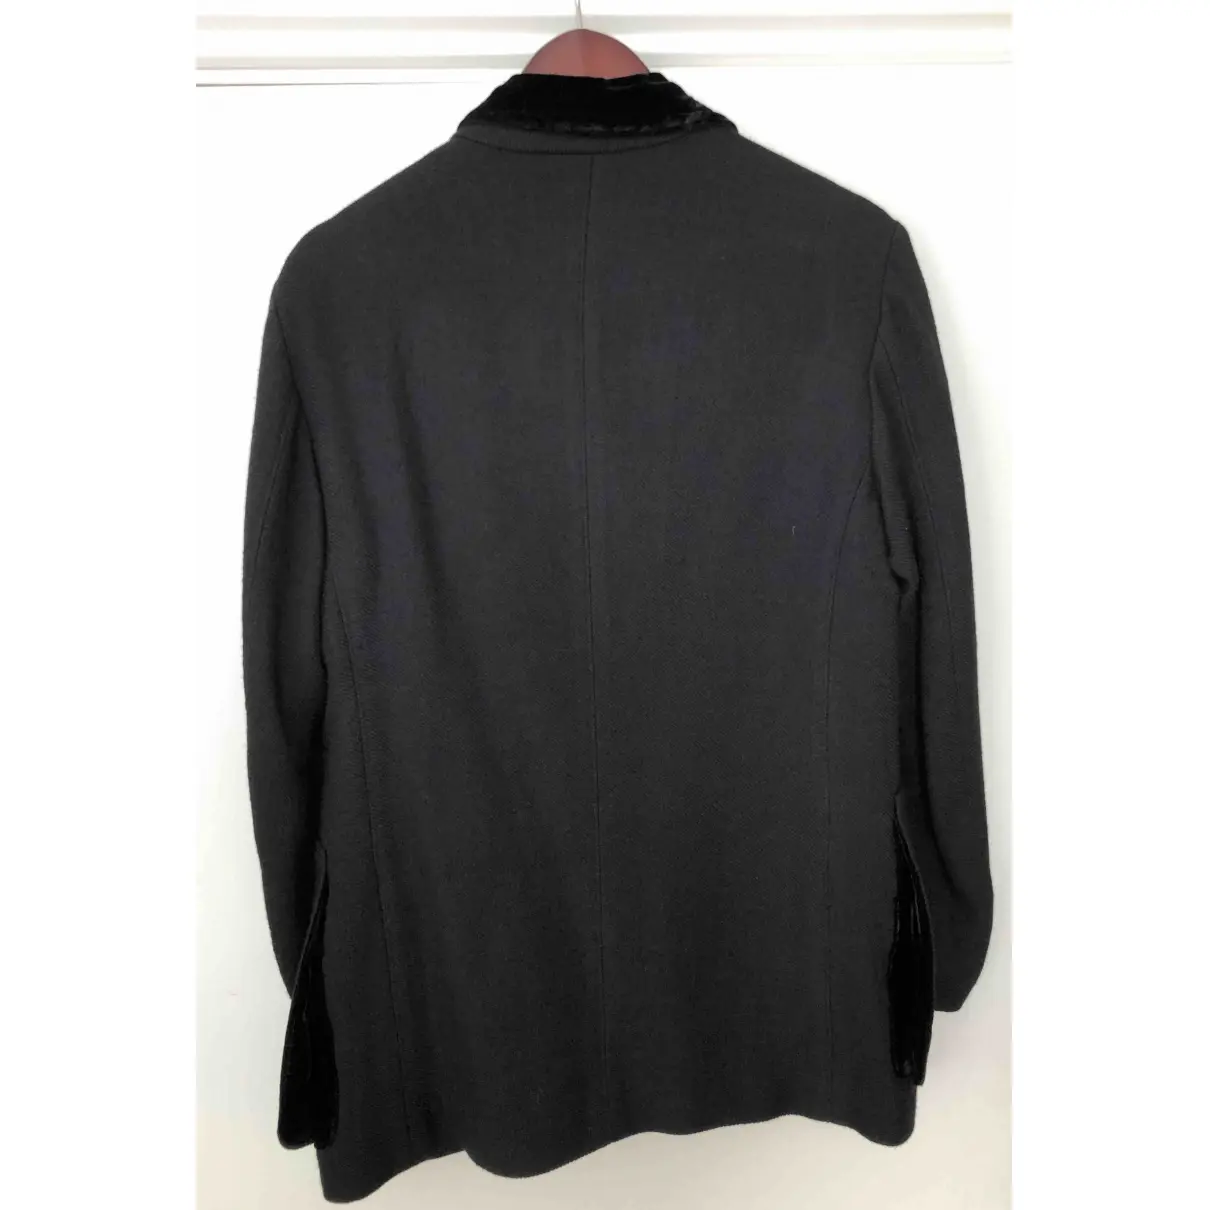 Buy Giorgio Armani Wool coat online - Vintage